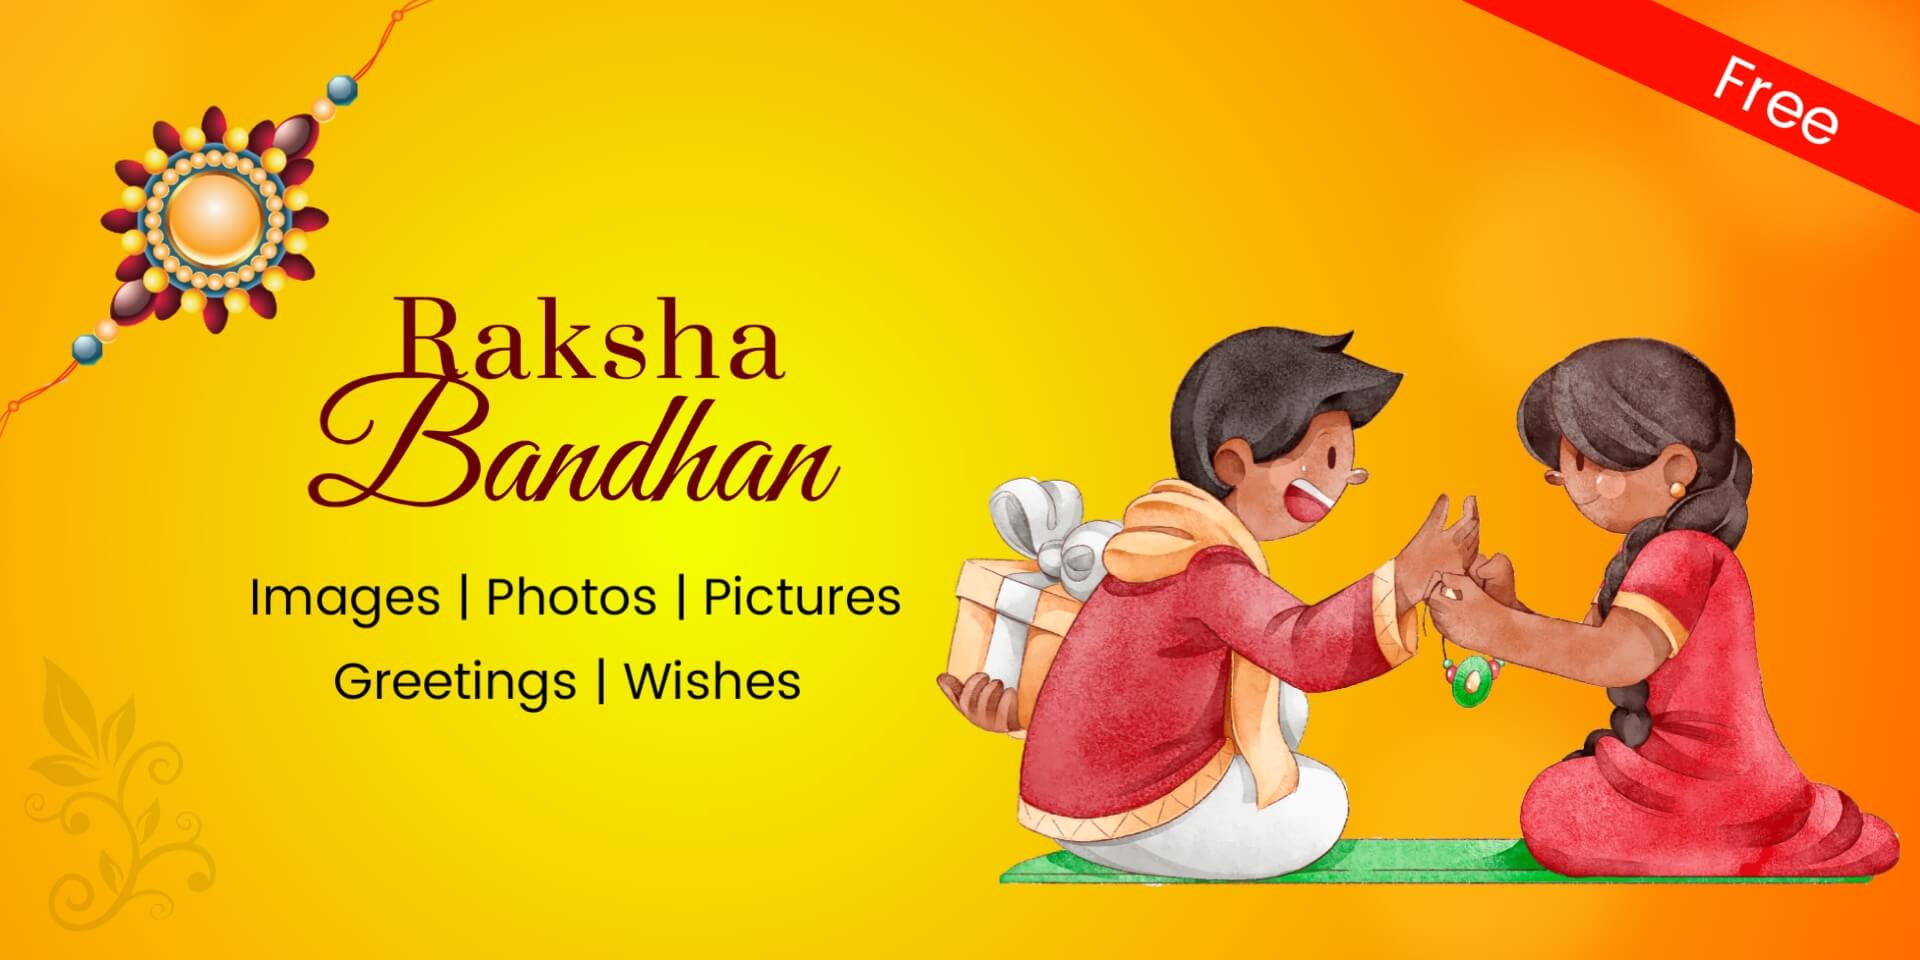 20 BEST Happy Raksha Bandhan Images, Photos & Pictures